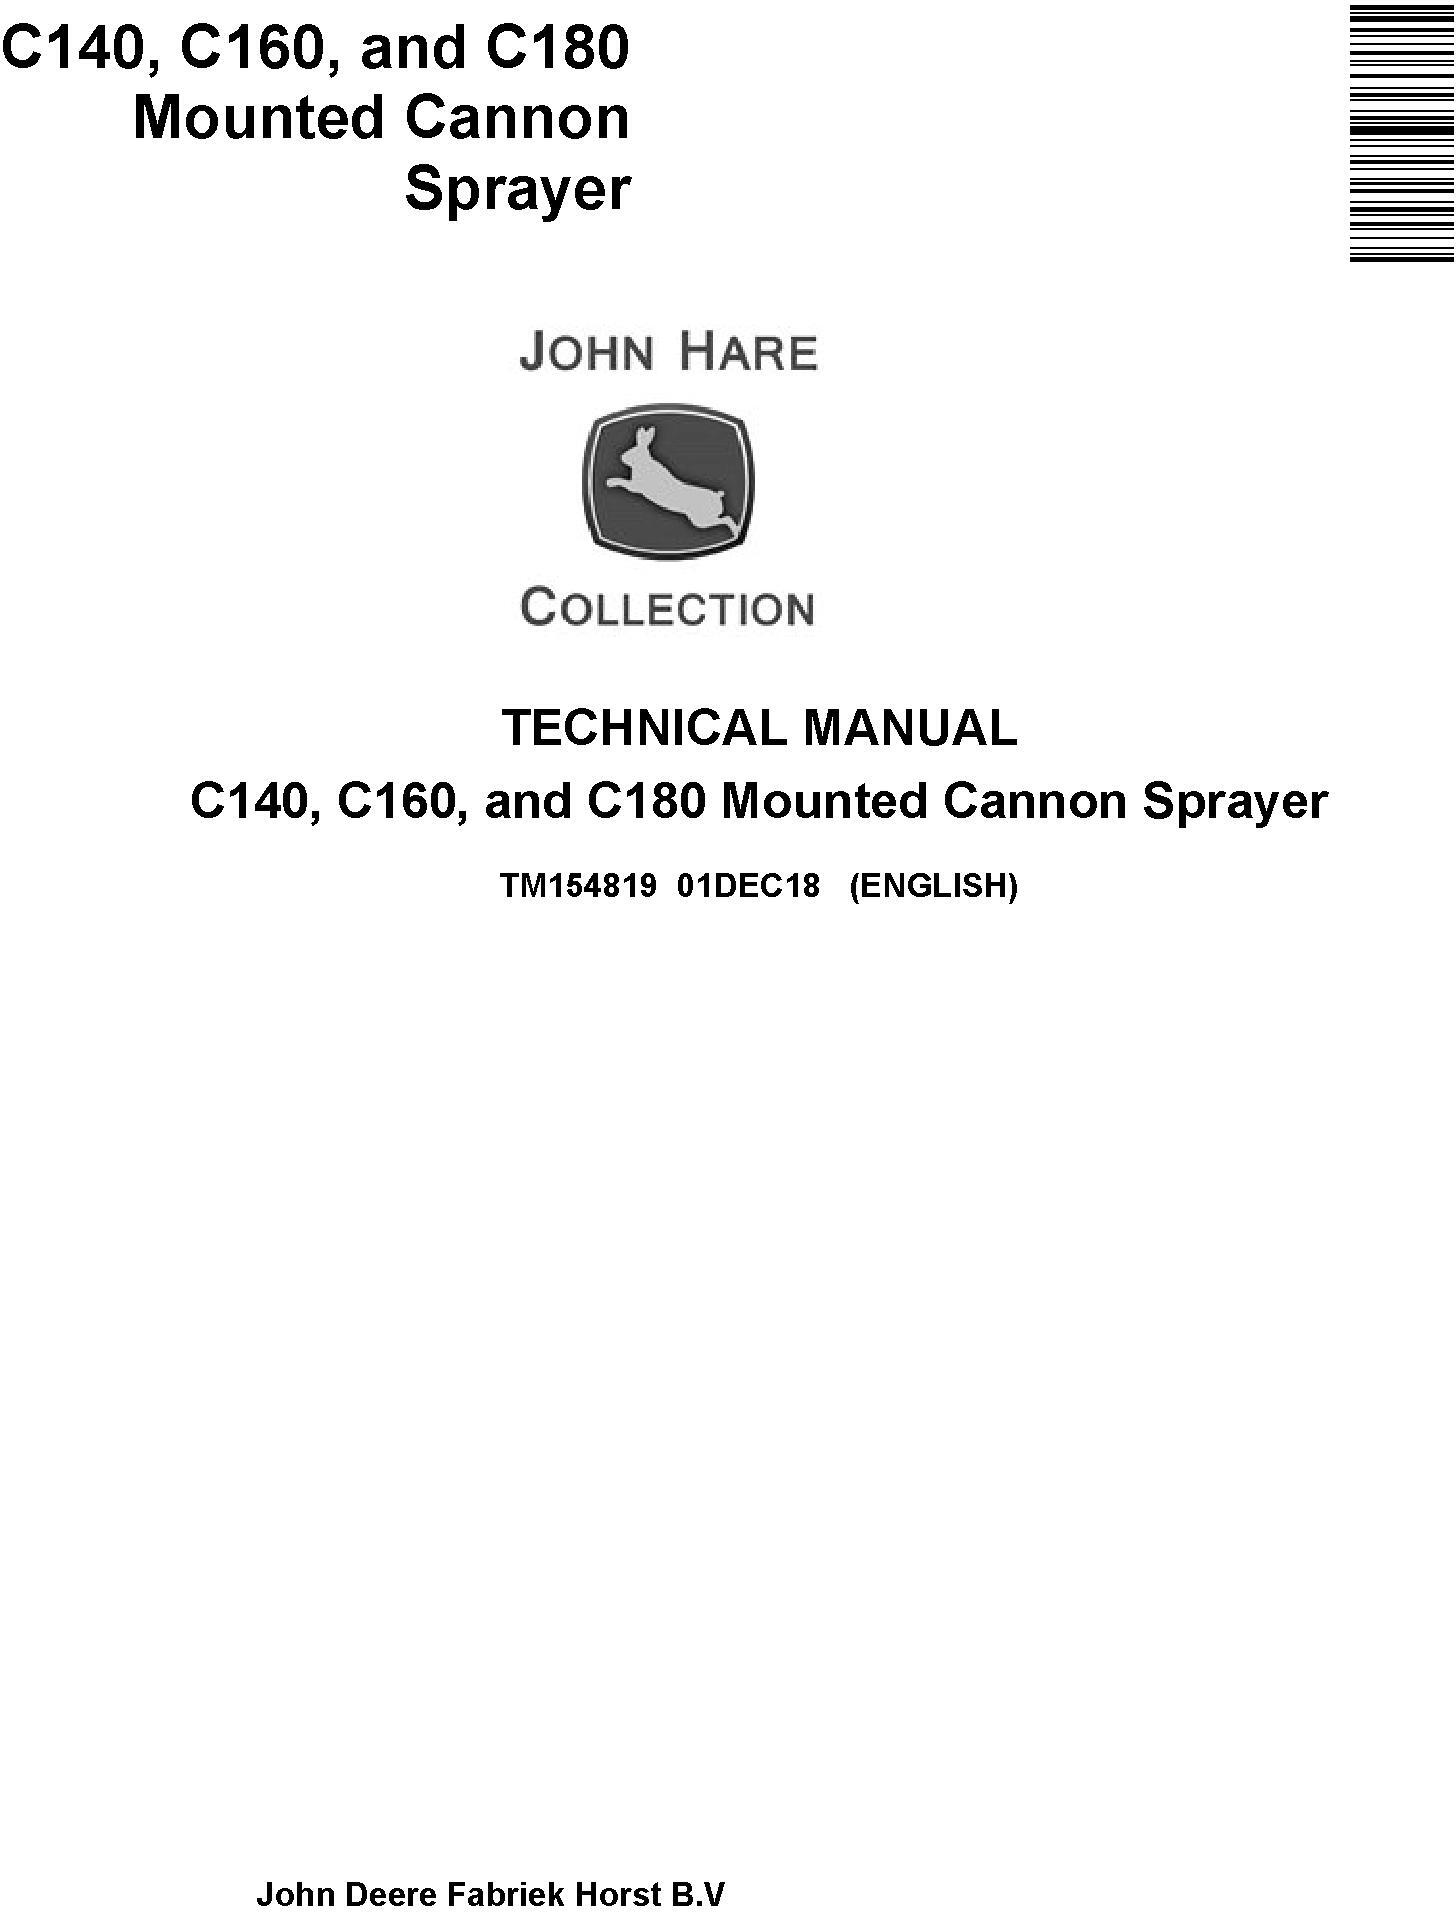 John Deere C140 C160 C180 Mounted Cannon Sprayer Technical Manual TM154819